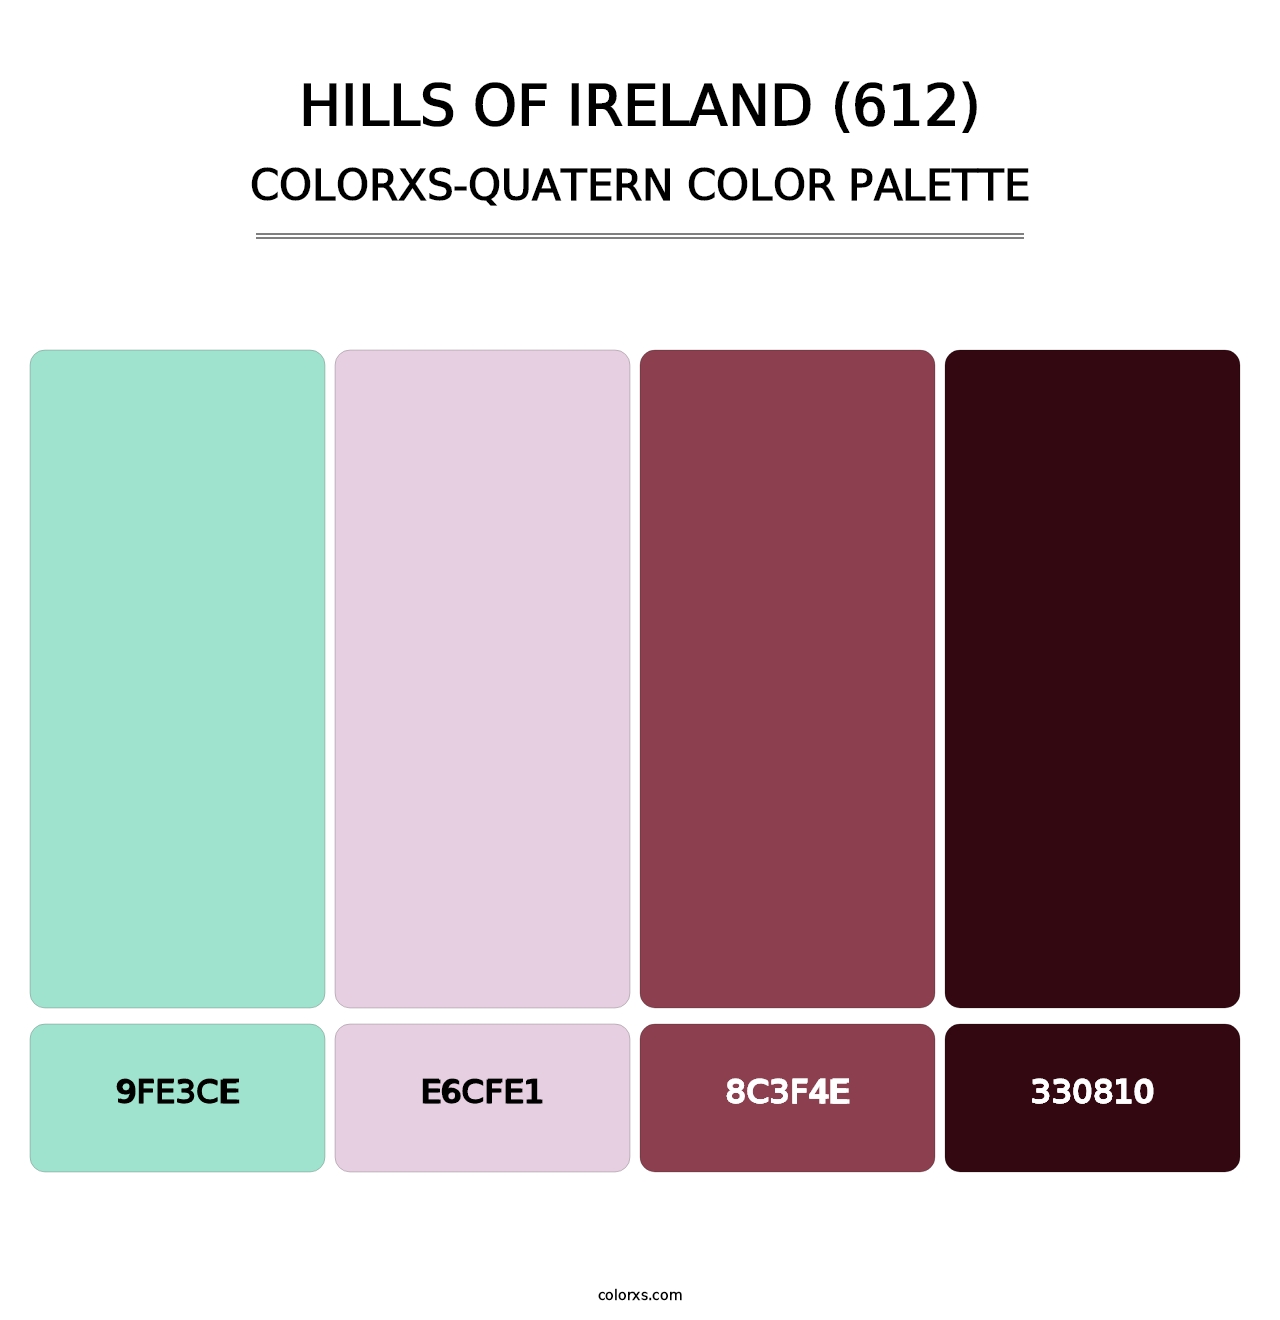 Hills of Ireland (612) - Colorxs Quatern Palette